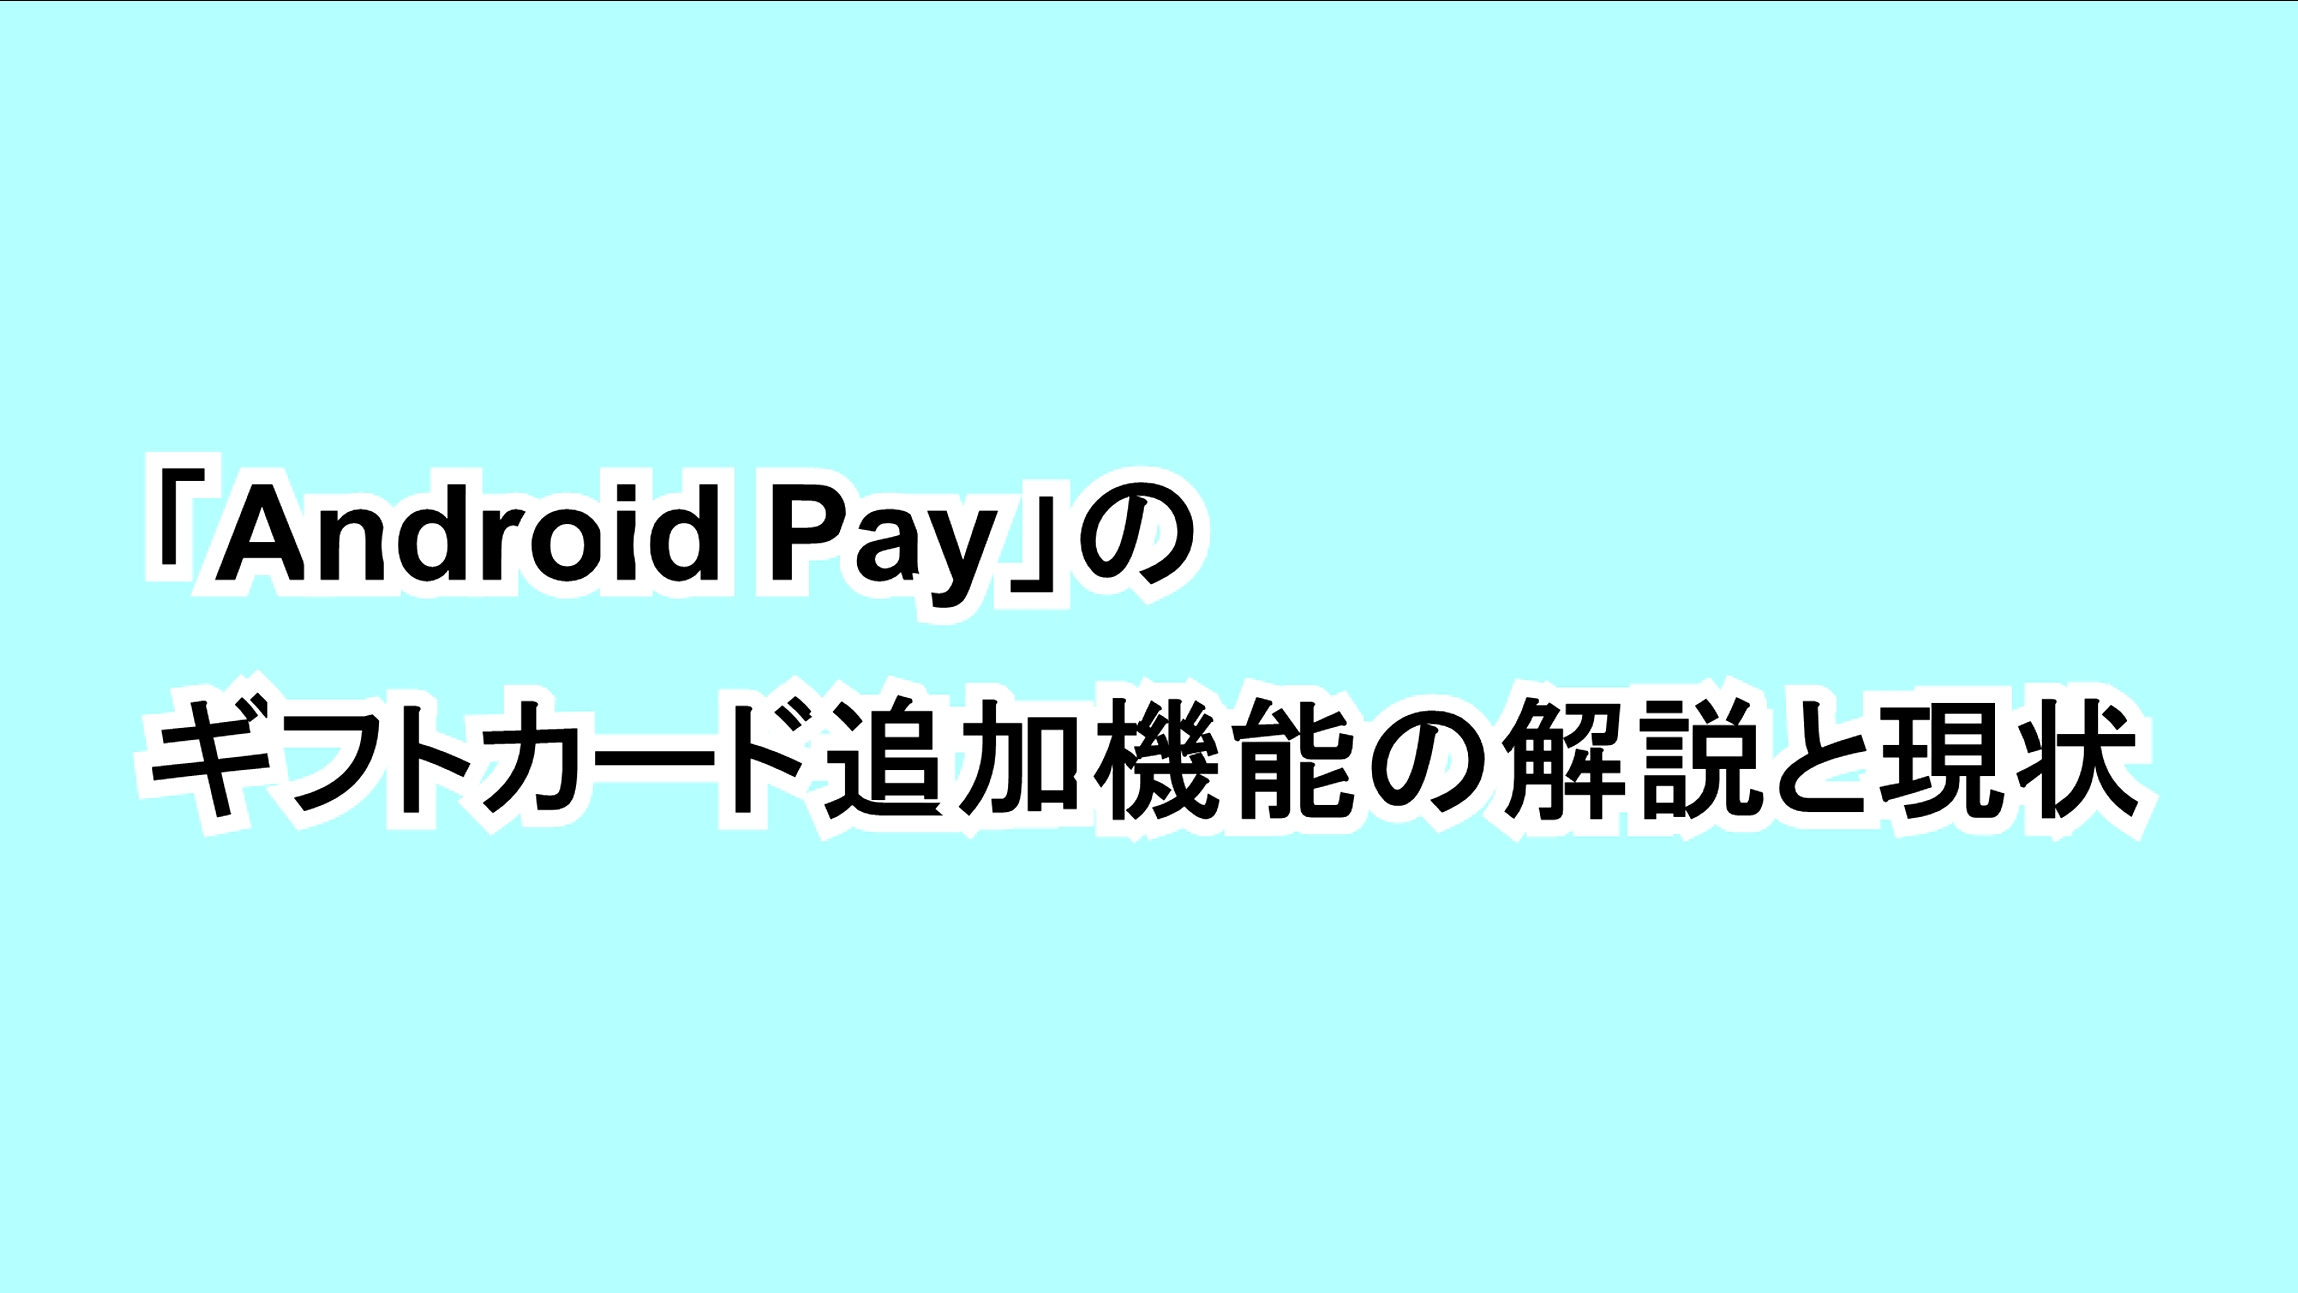 「Android Pay」のギフトカード追加機能の解説と現状﻿